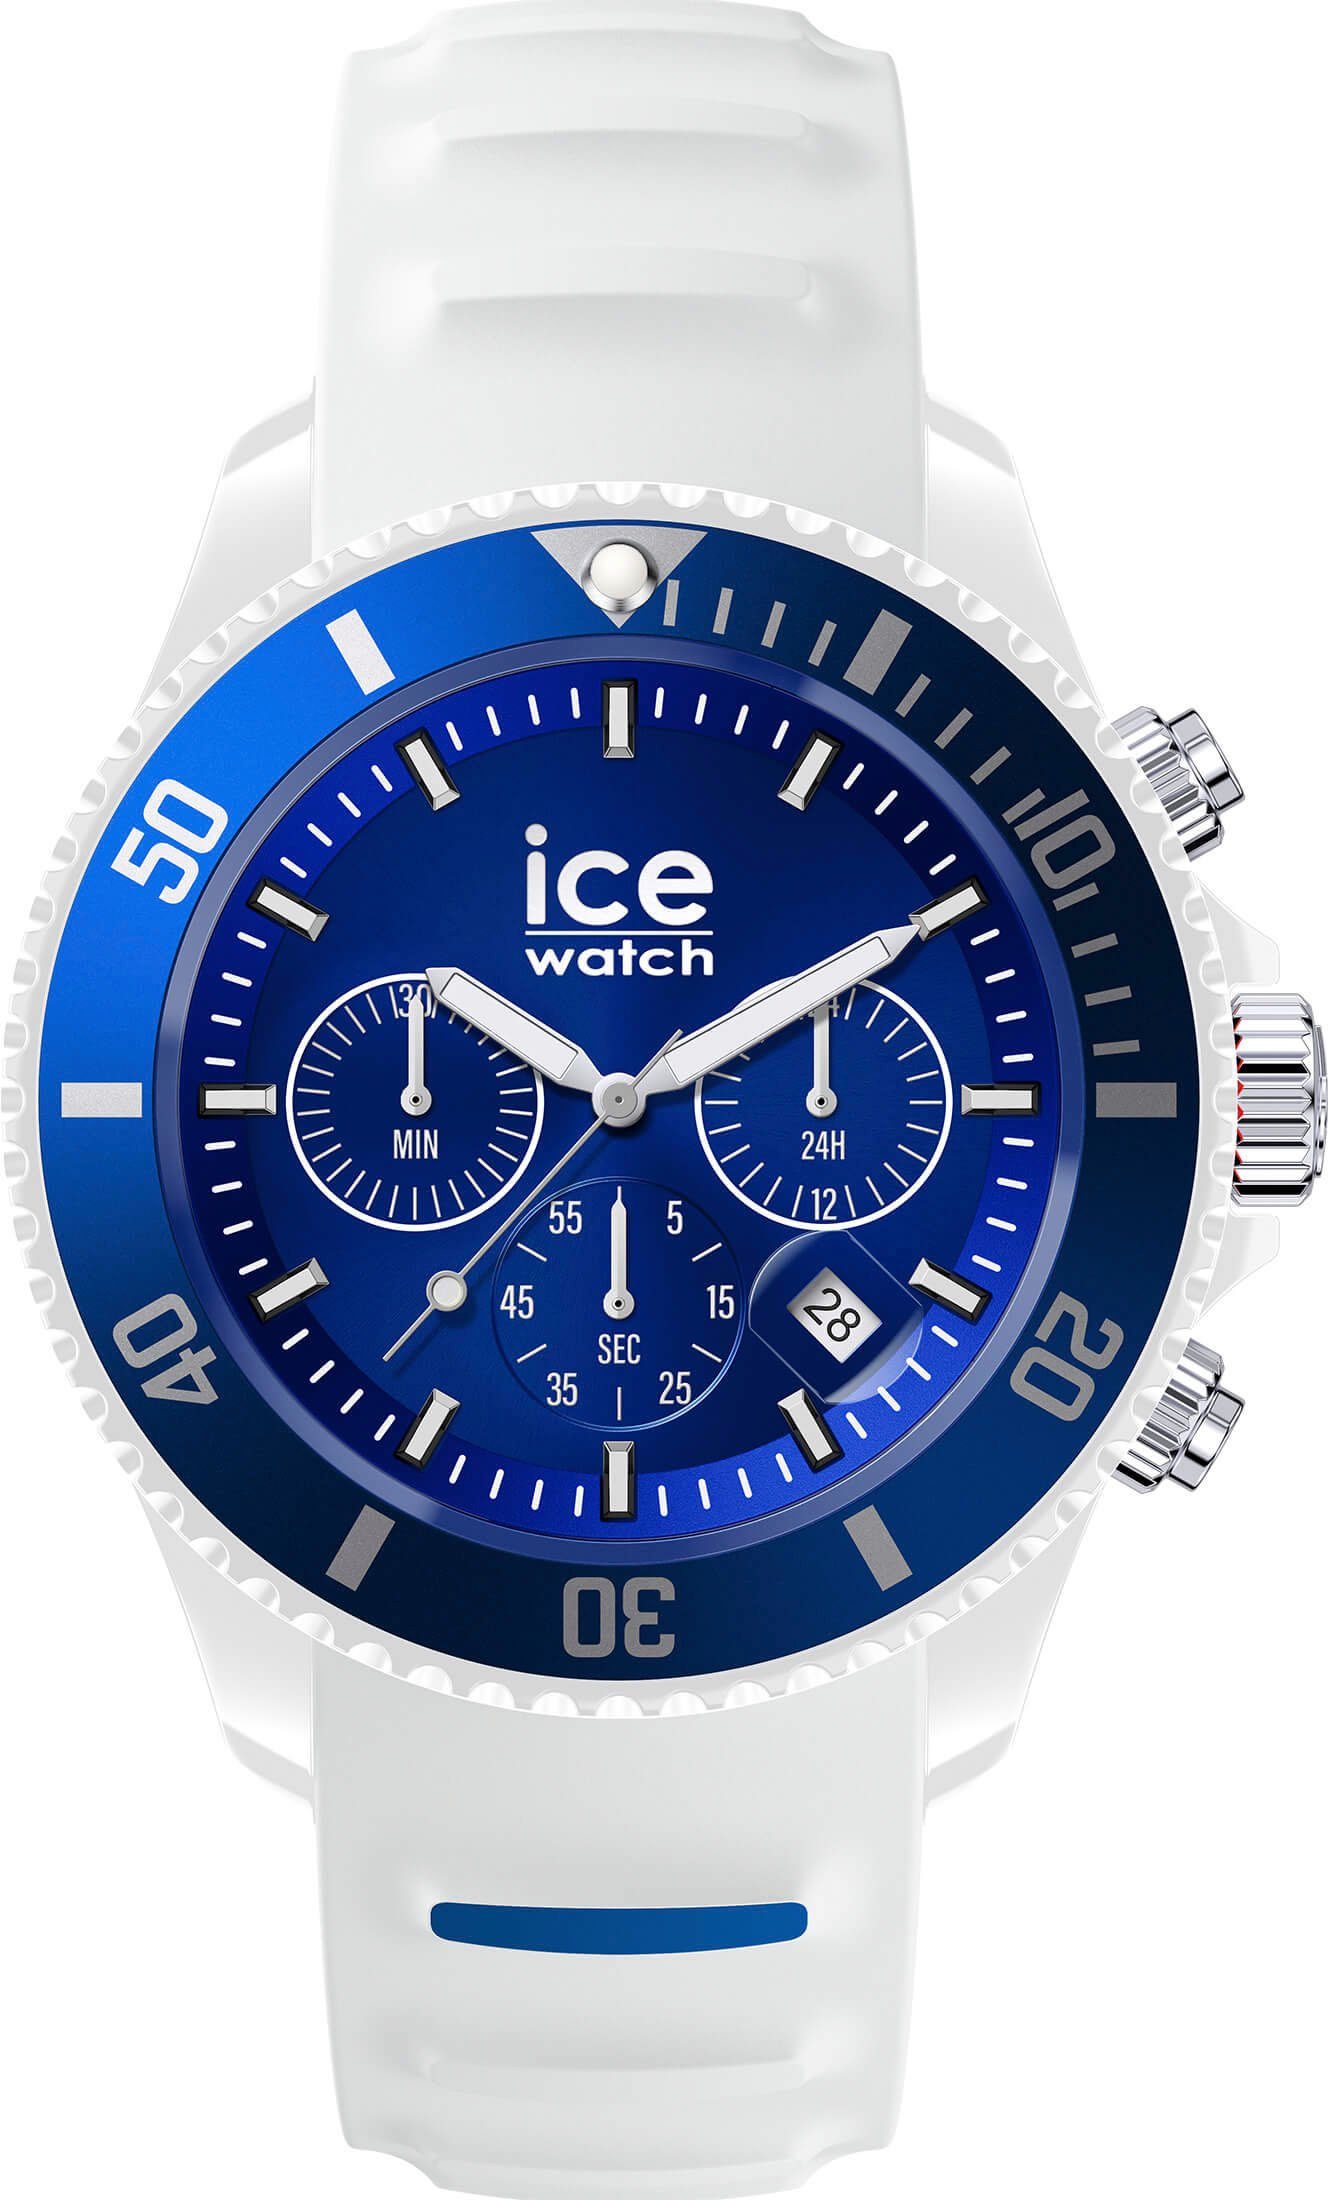 021424 - CH, ice-watch ICE chrono Chronograph - Medium - White blue